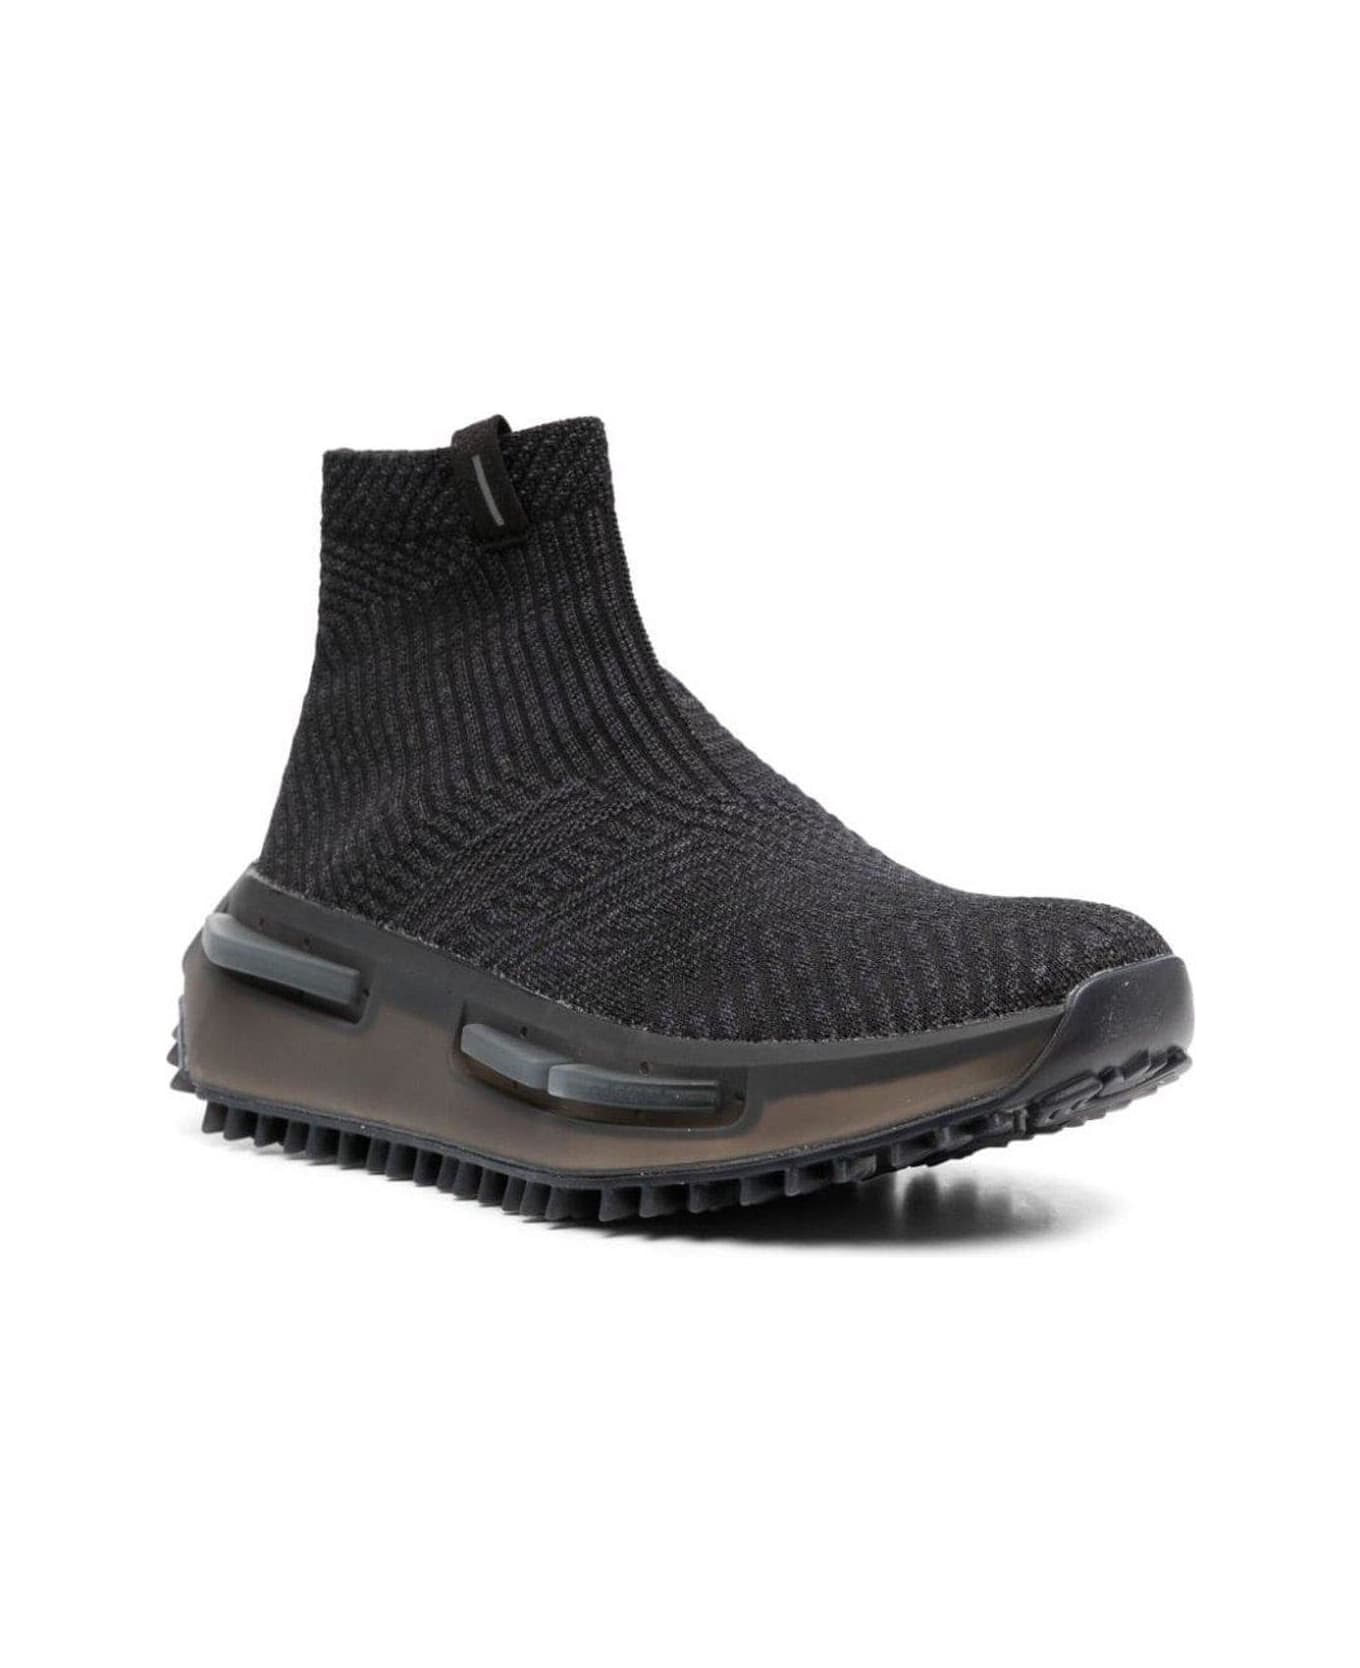 Adidas Originals Nmd_s1 Sock Sneakers - Cblack Carbon Cblack スニーカー